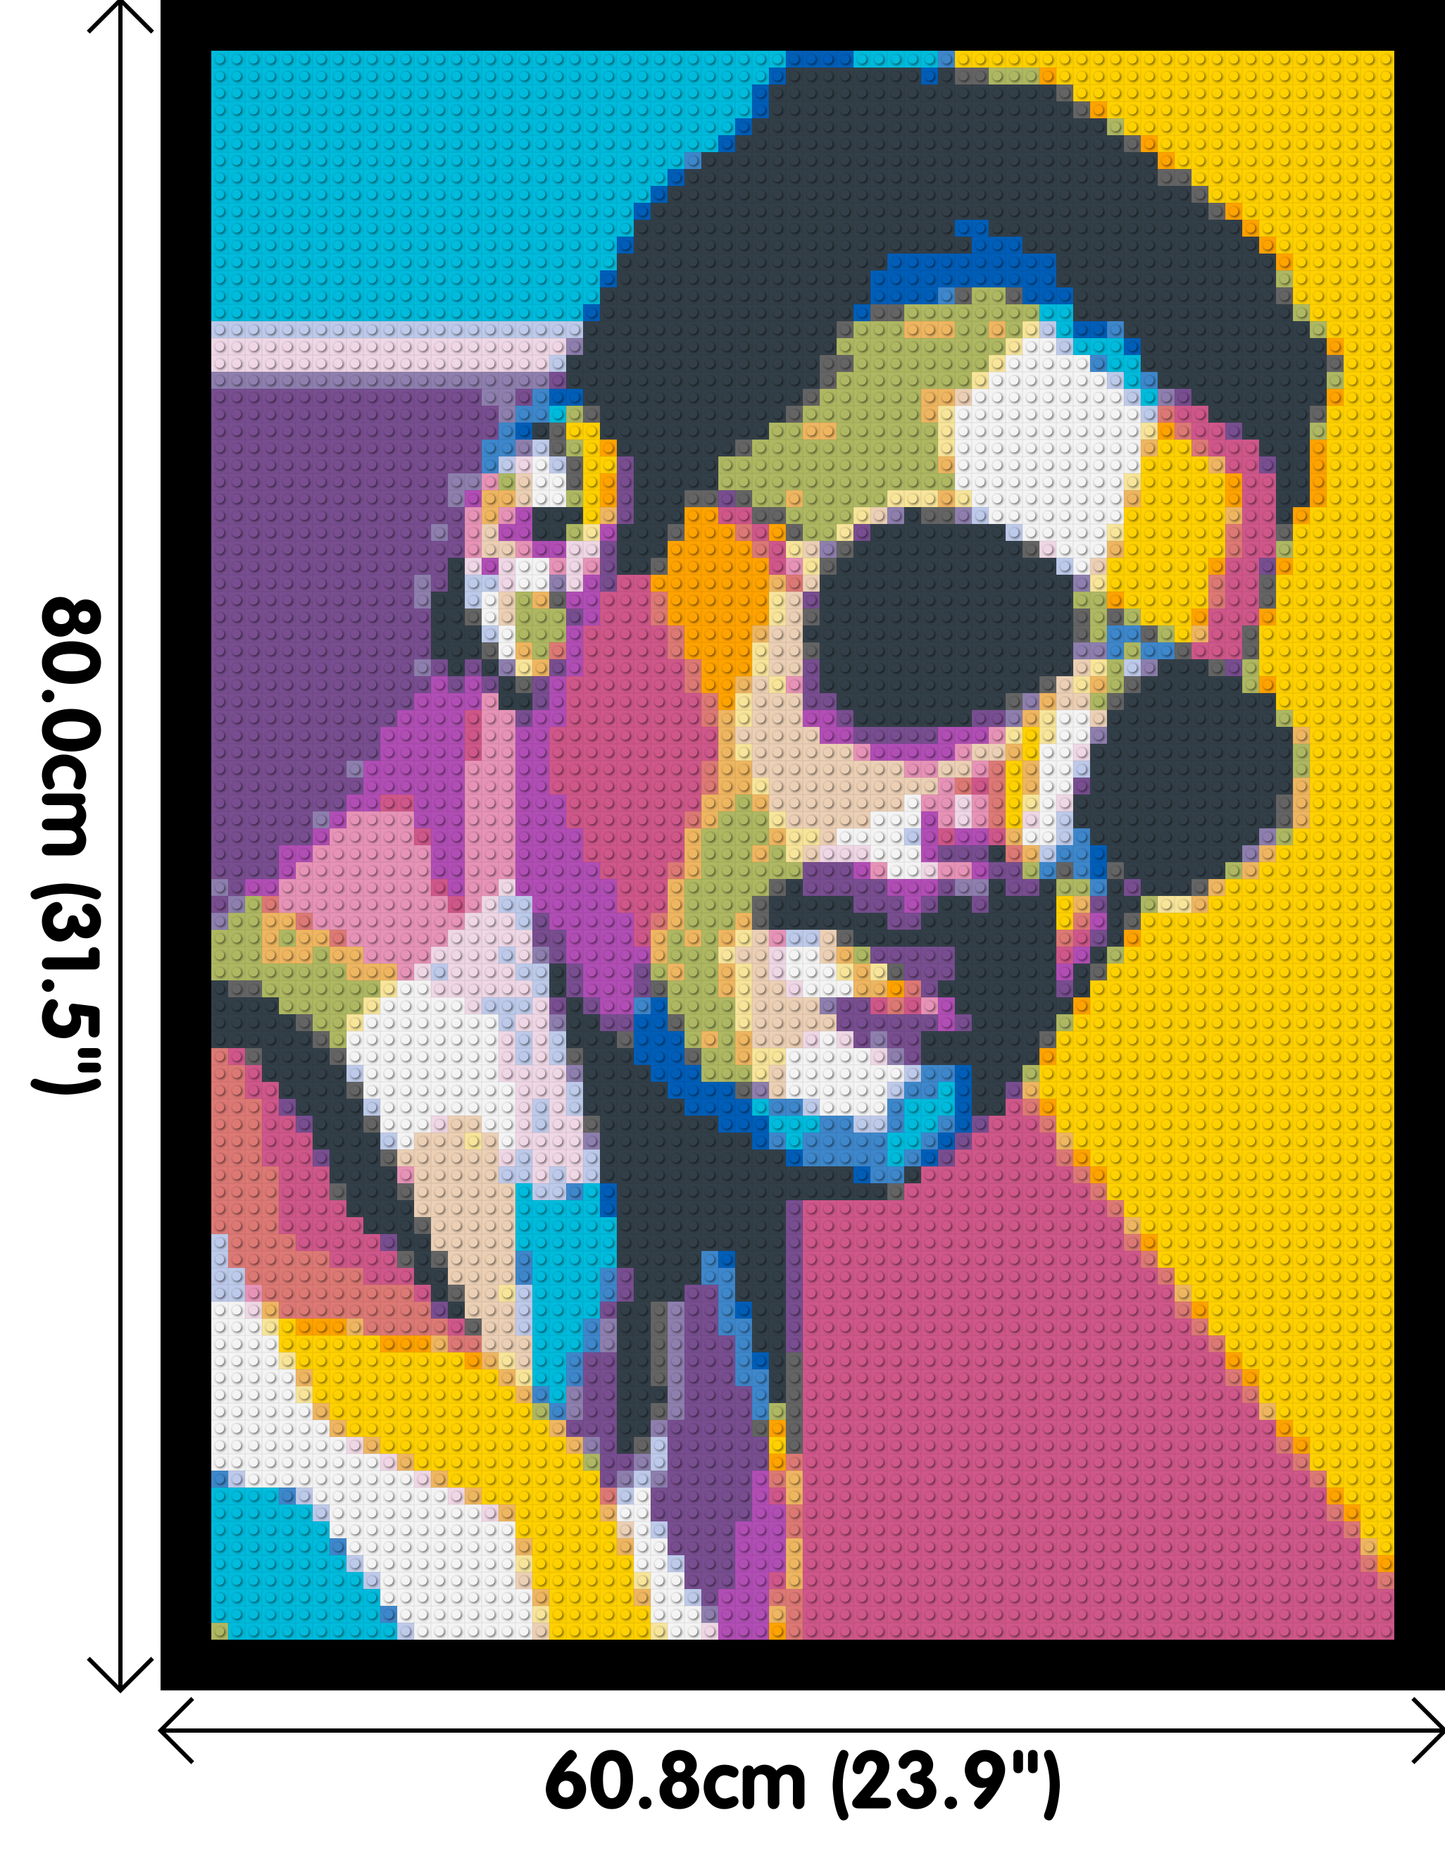 Freddie Mercury - Brick Art Mosaic Kit